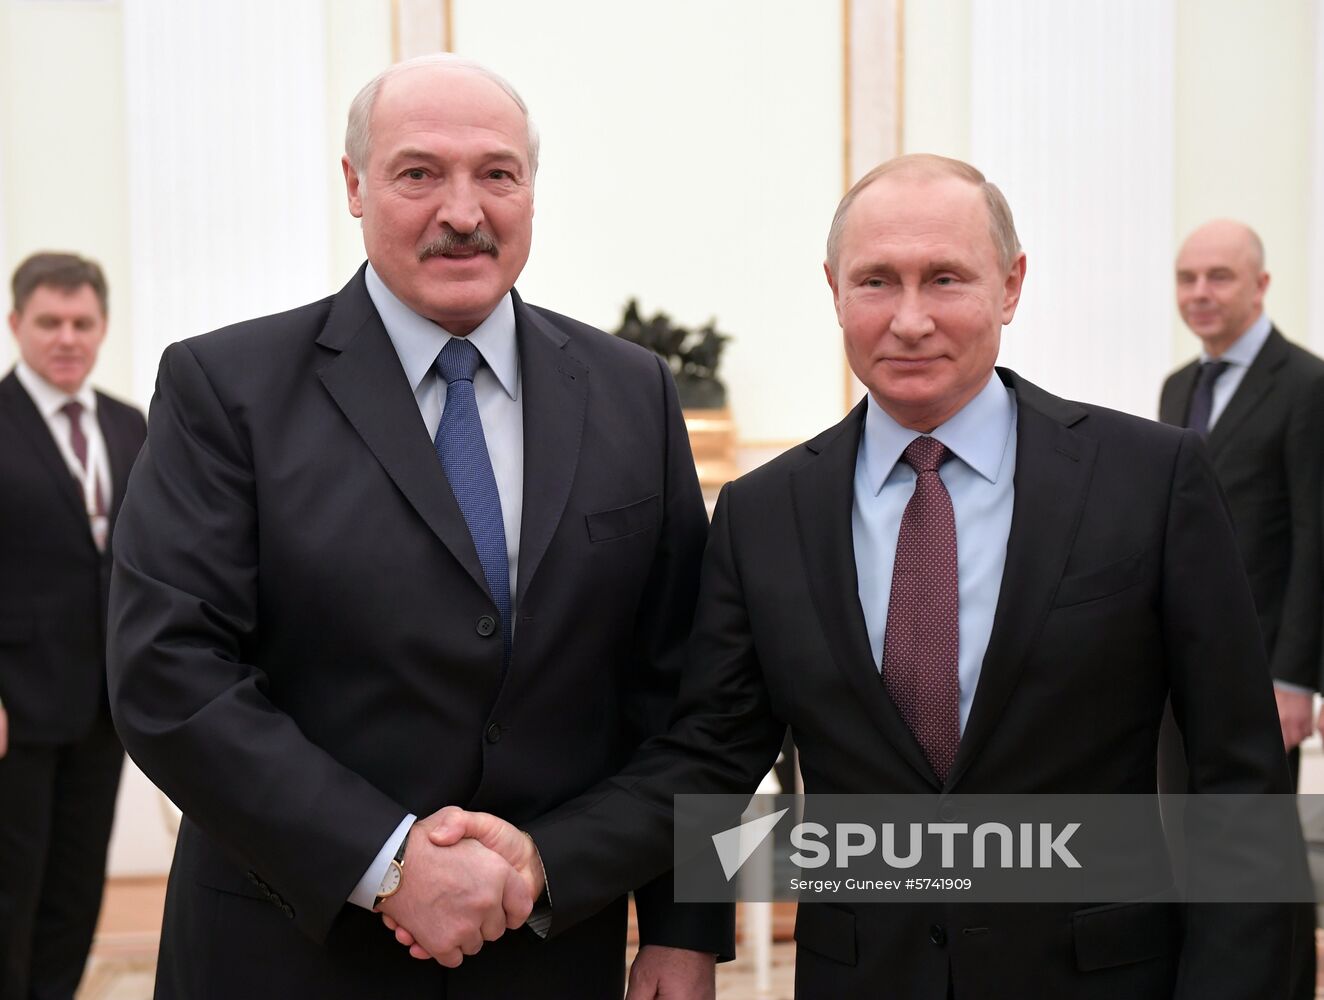 President Vladimir Putin meets with President of Belarus Alexander Lukashenko